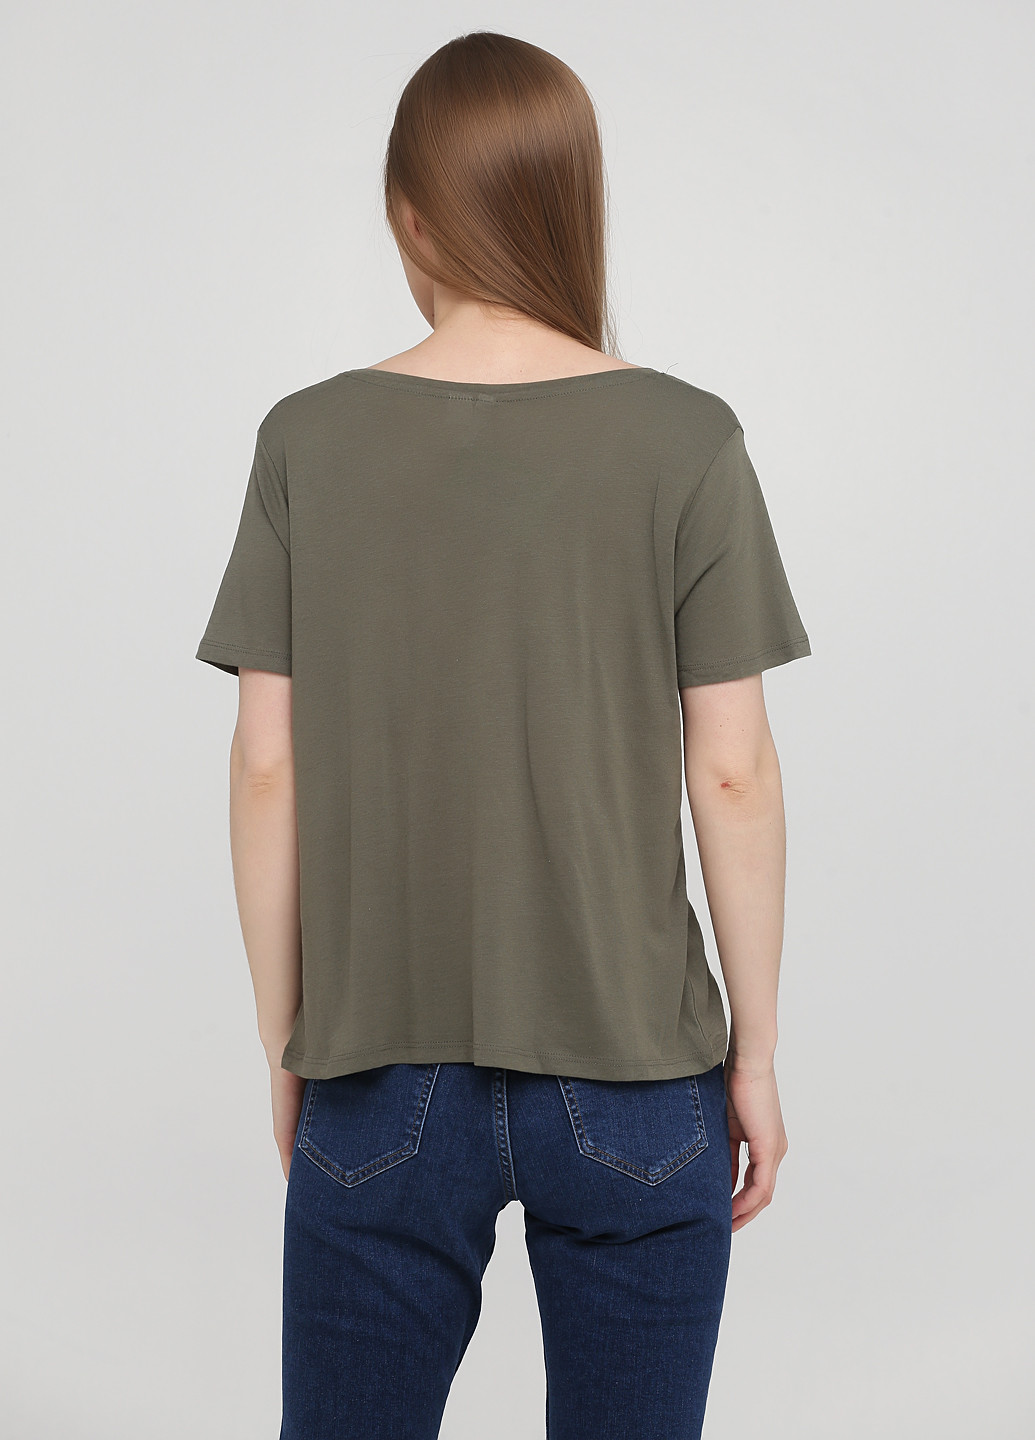 Хаки (оливковая) летняя футболка H&M